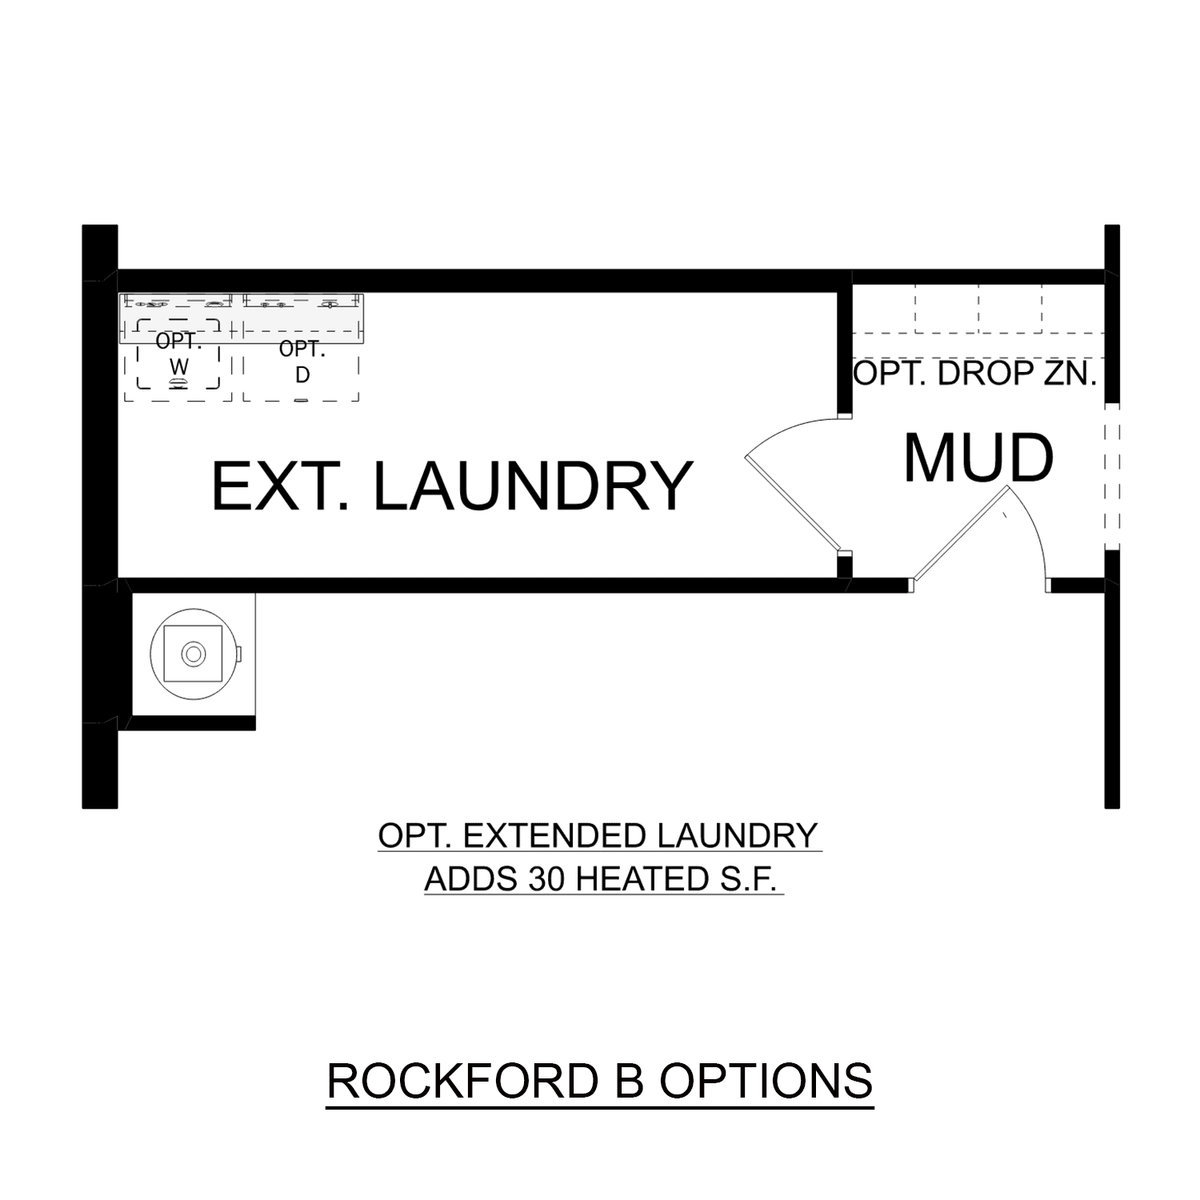 2 - The Rockford B floor plan layout for 2104 Brandon Drive in Davidson Homes' North Ridge community.